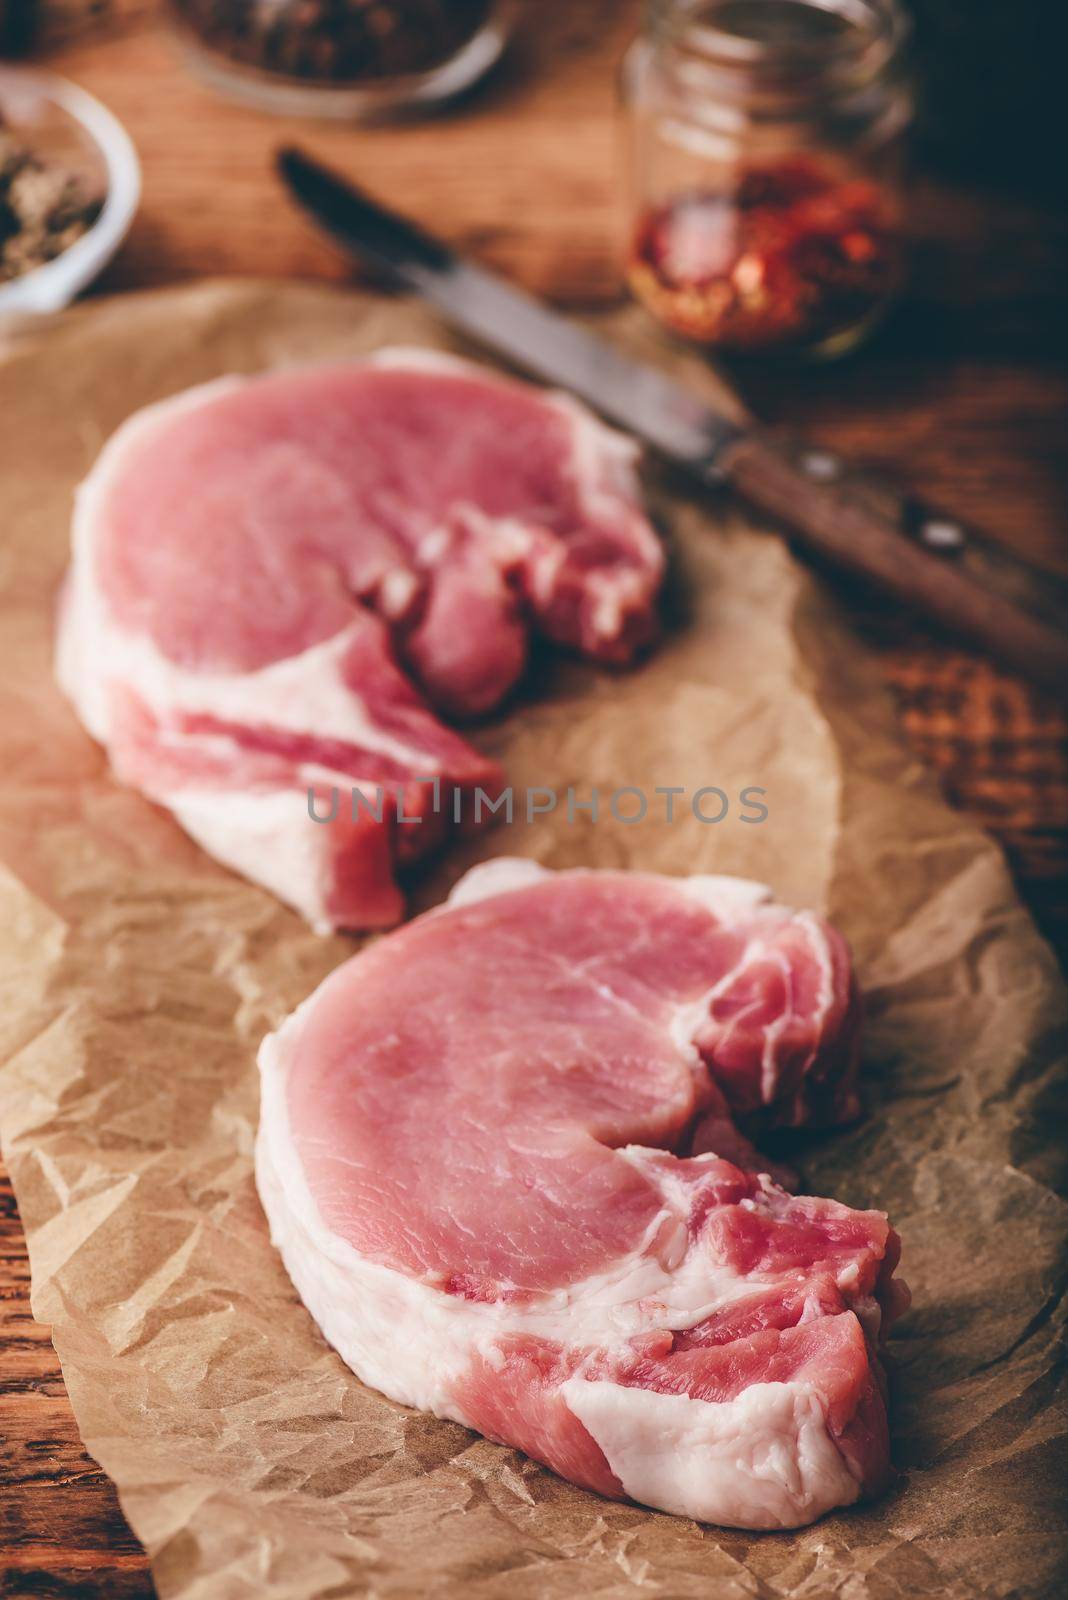 Two pork loin steaks by Seva_blsv